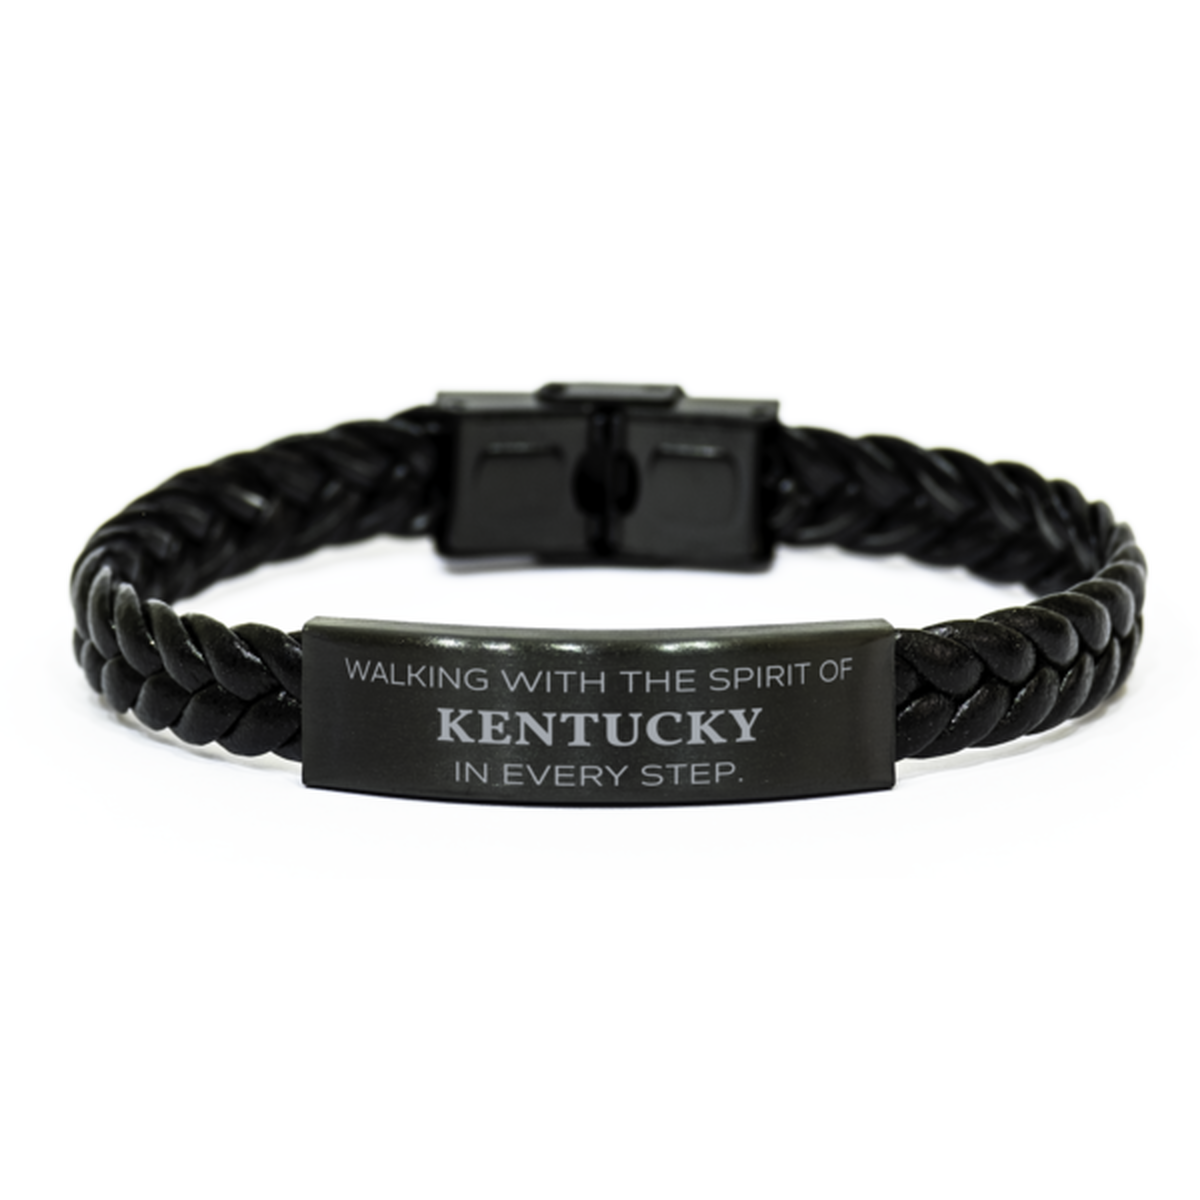 Kentucky Gifts, Walking with the spirit, Love Kentucky Birthday Christmas Braided Leather Bracelet For Kentucky People, Men, Women, Friends